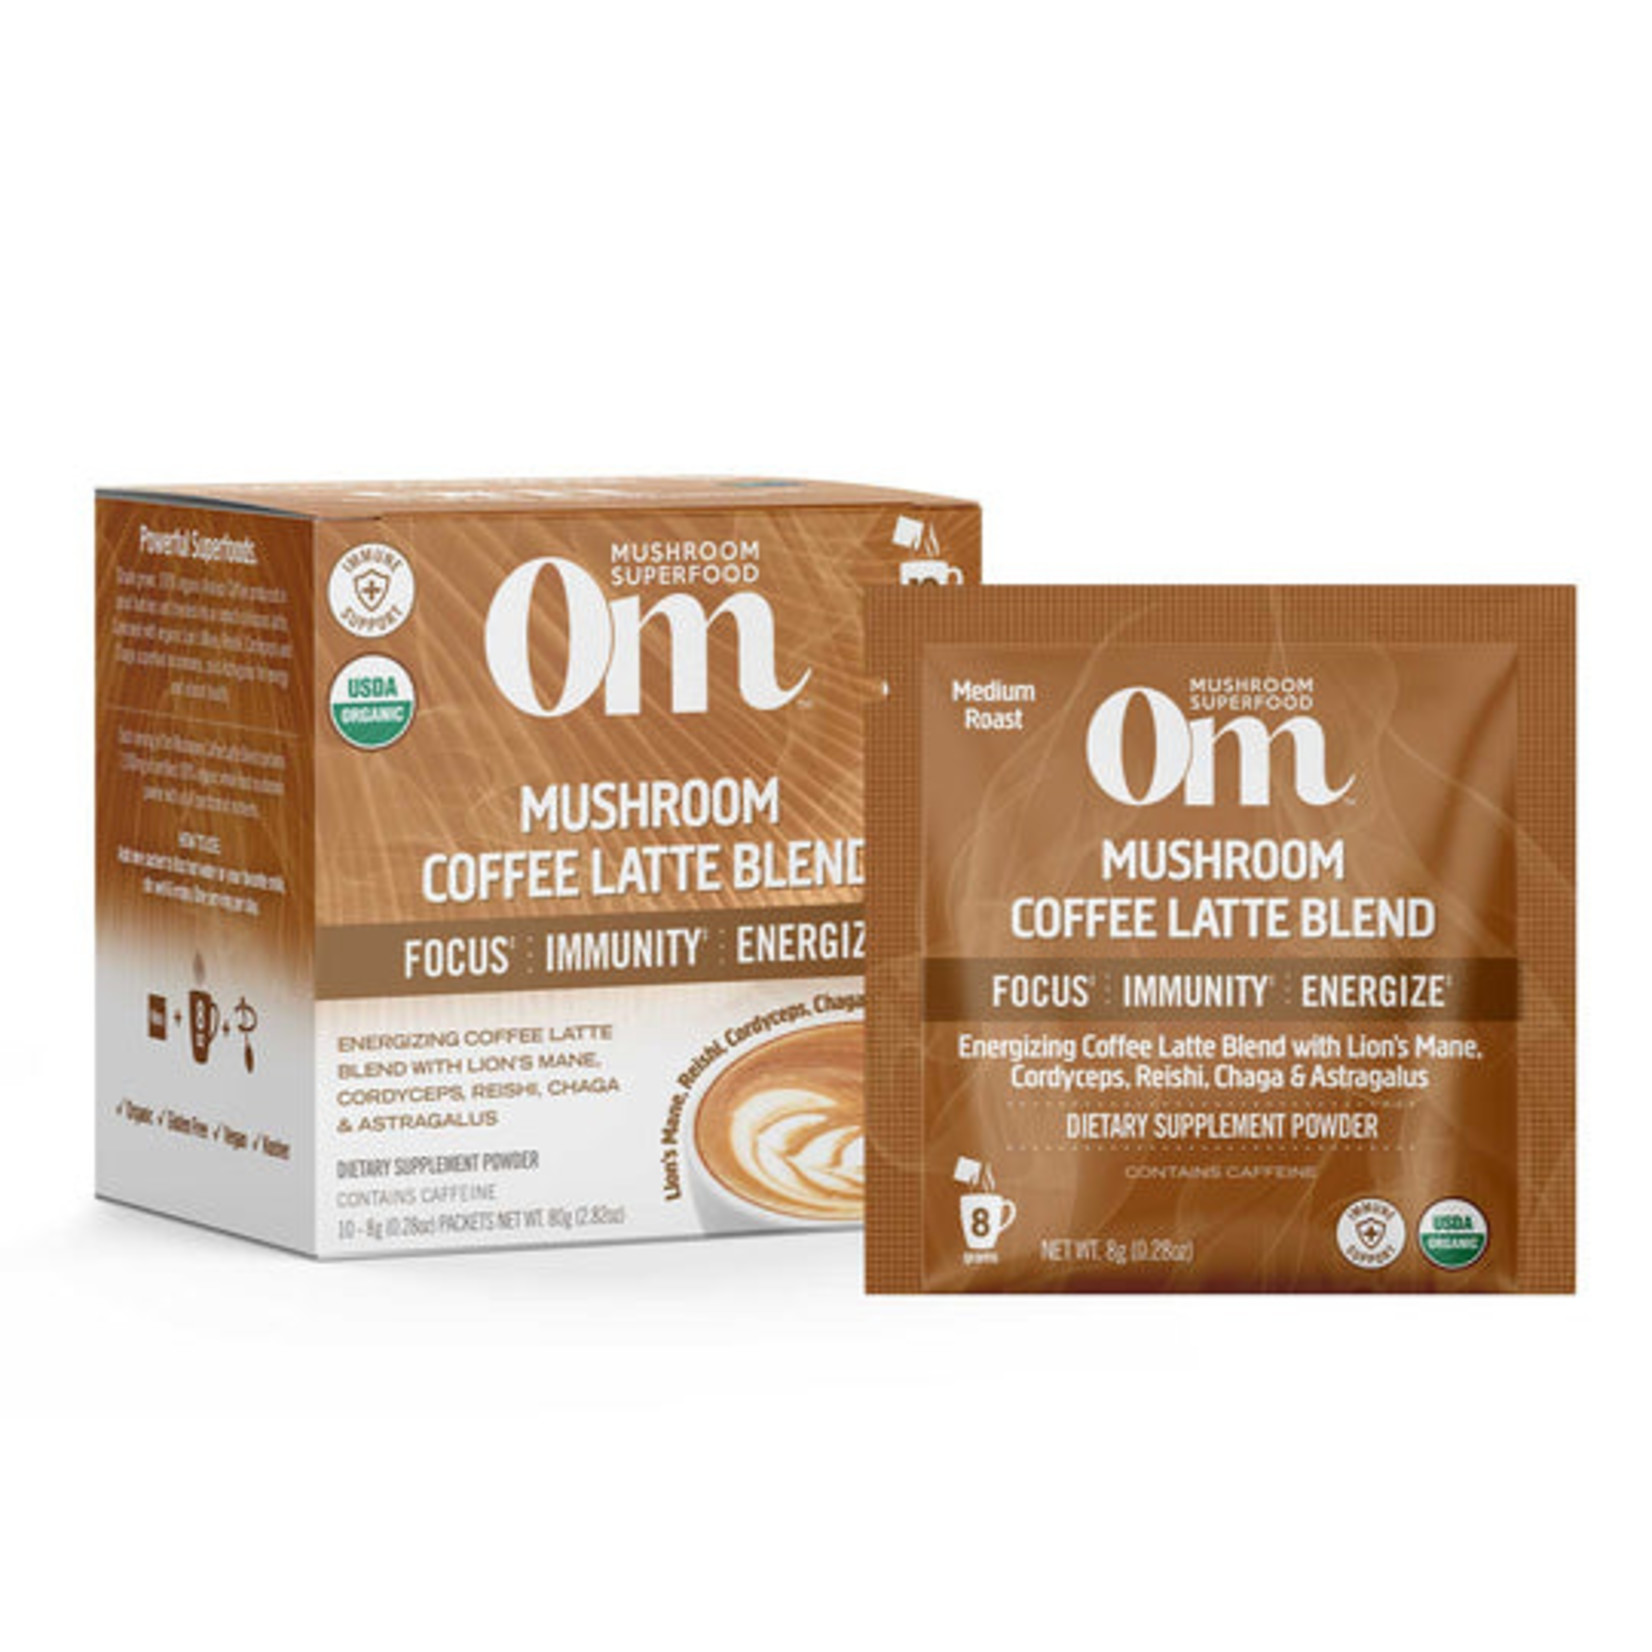 Om Mushroom Om - Box of Mushroom Coffee Blend - 10 Pack